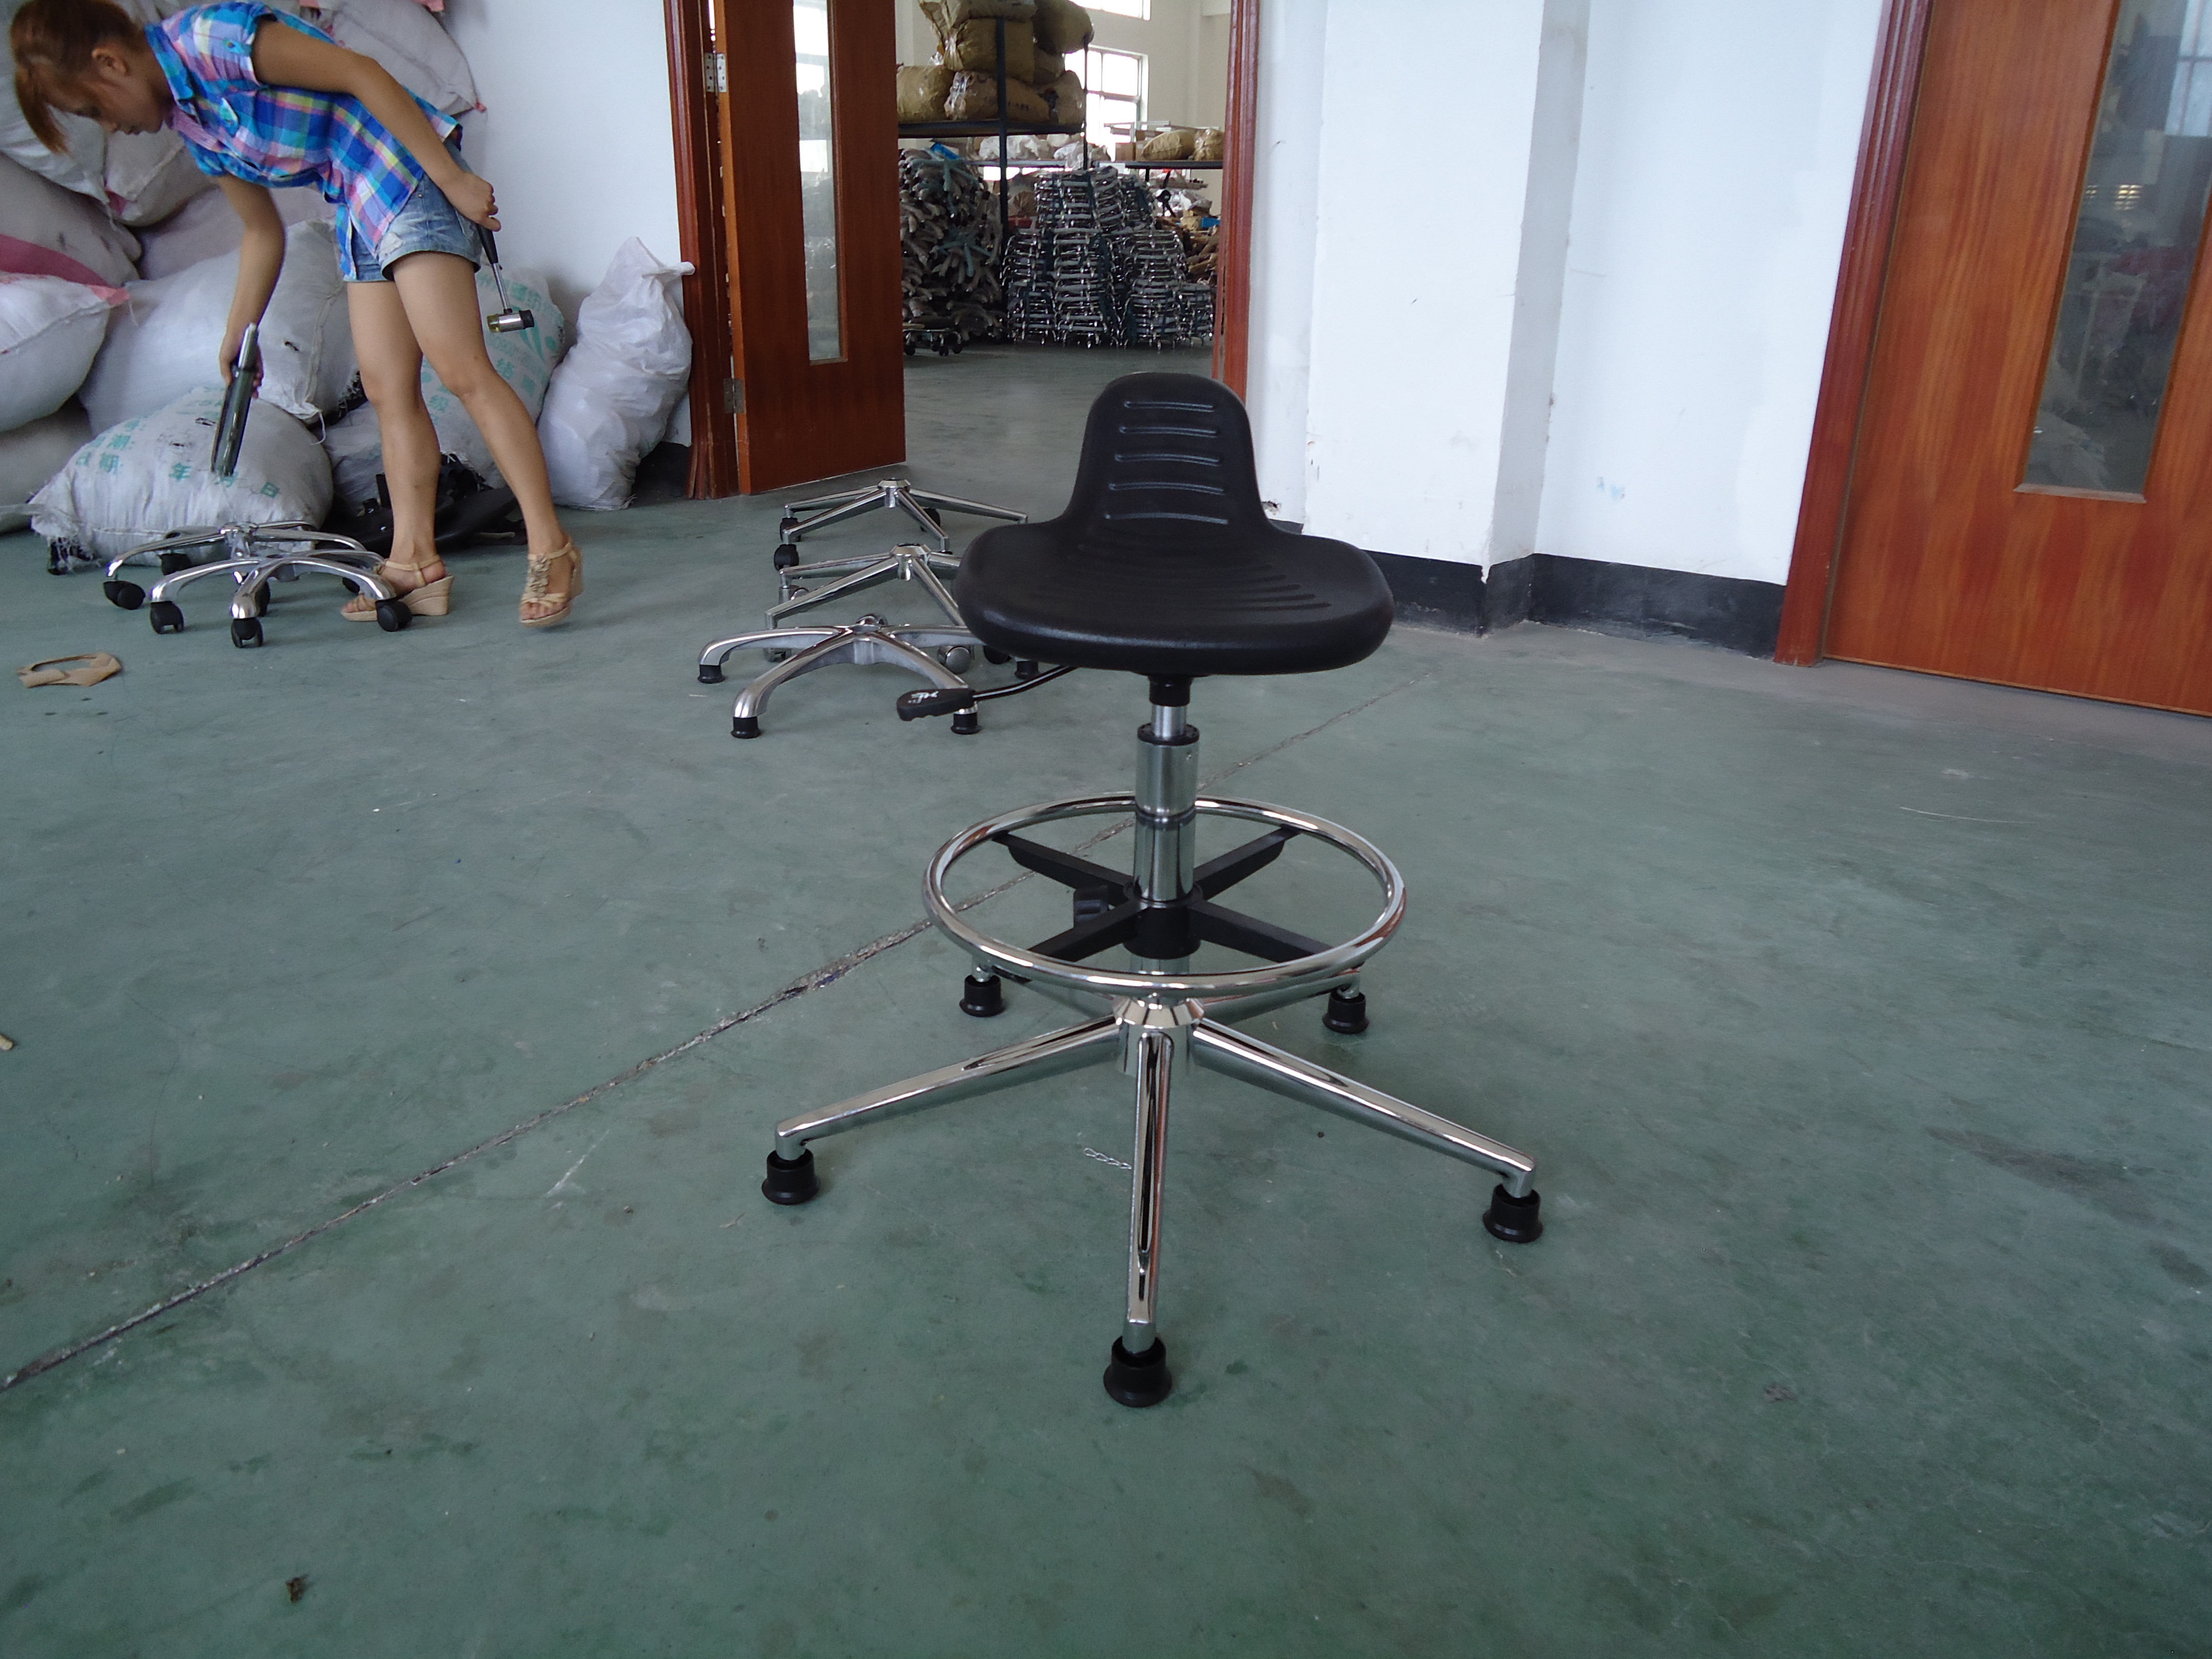 50mm Seat Thinckness Adjustable Cleanroom ESD Stool Chair